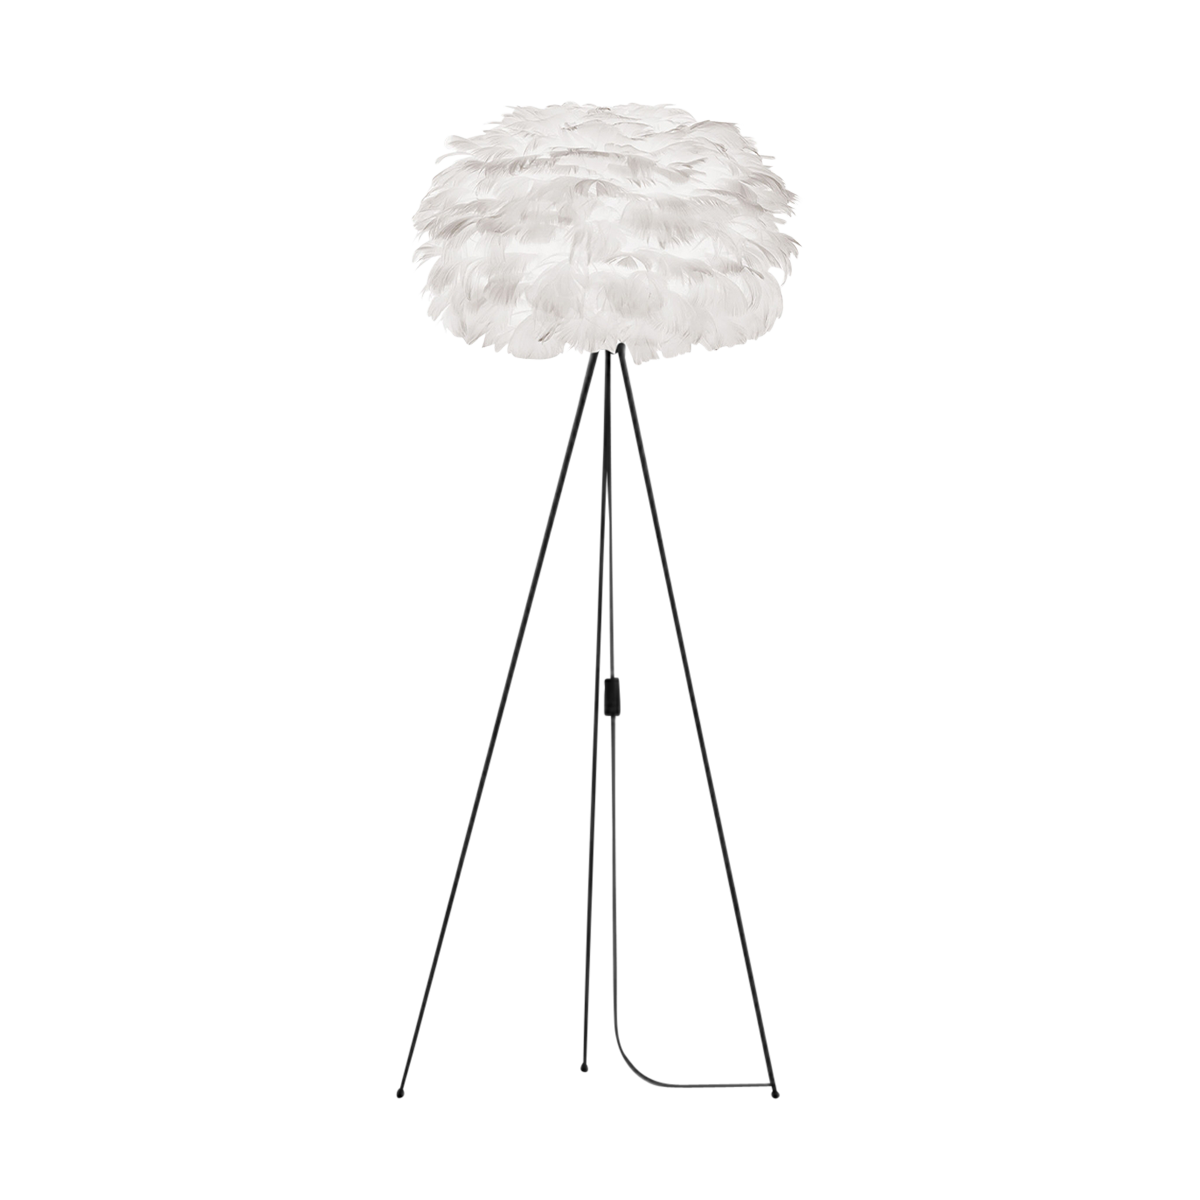 Eos Medium vloerlamp white - met tripod zwart - Ø 45 cm